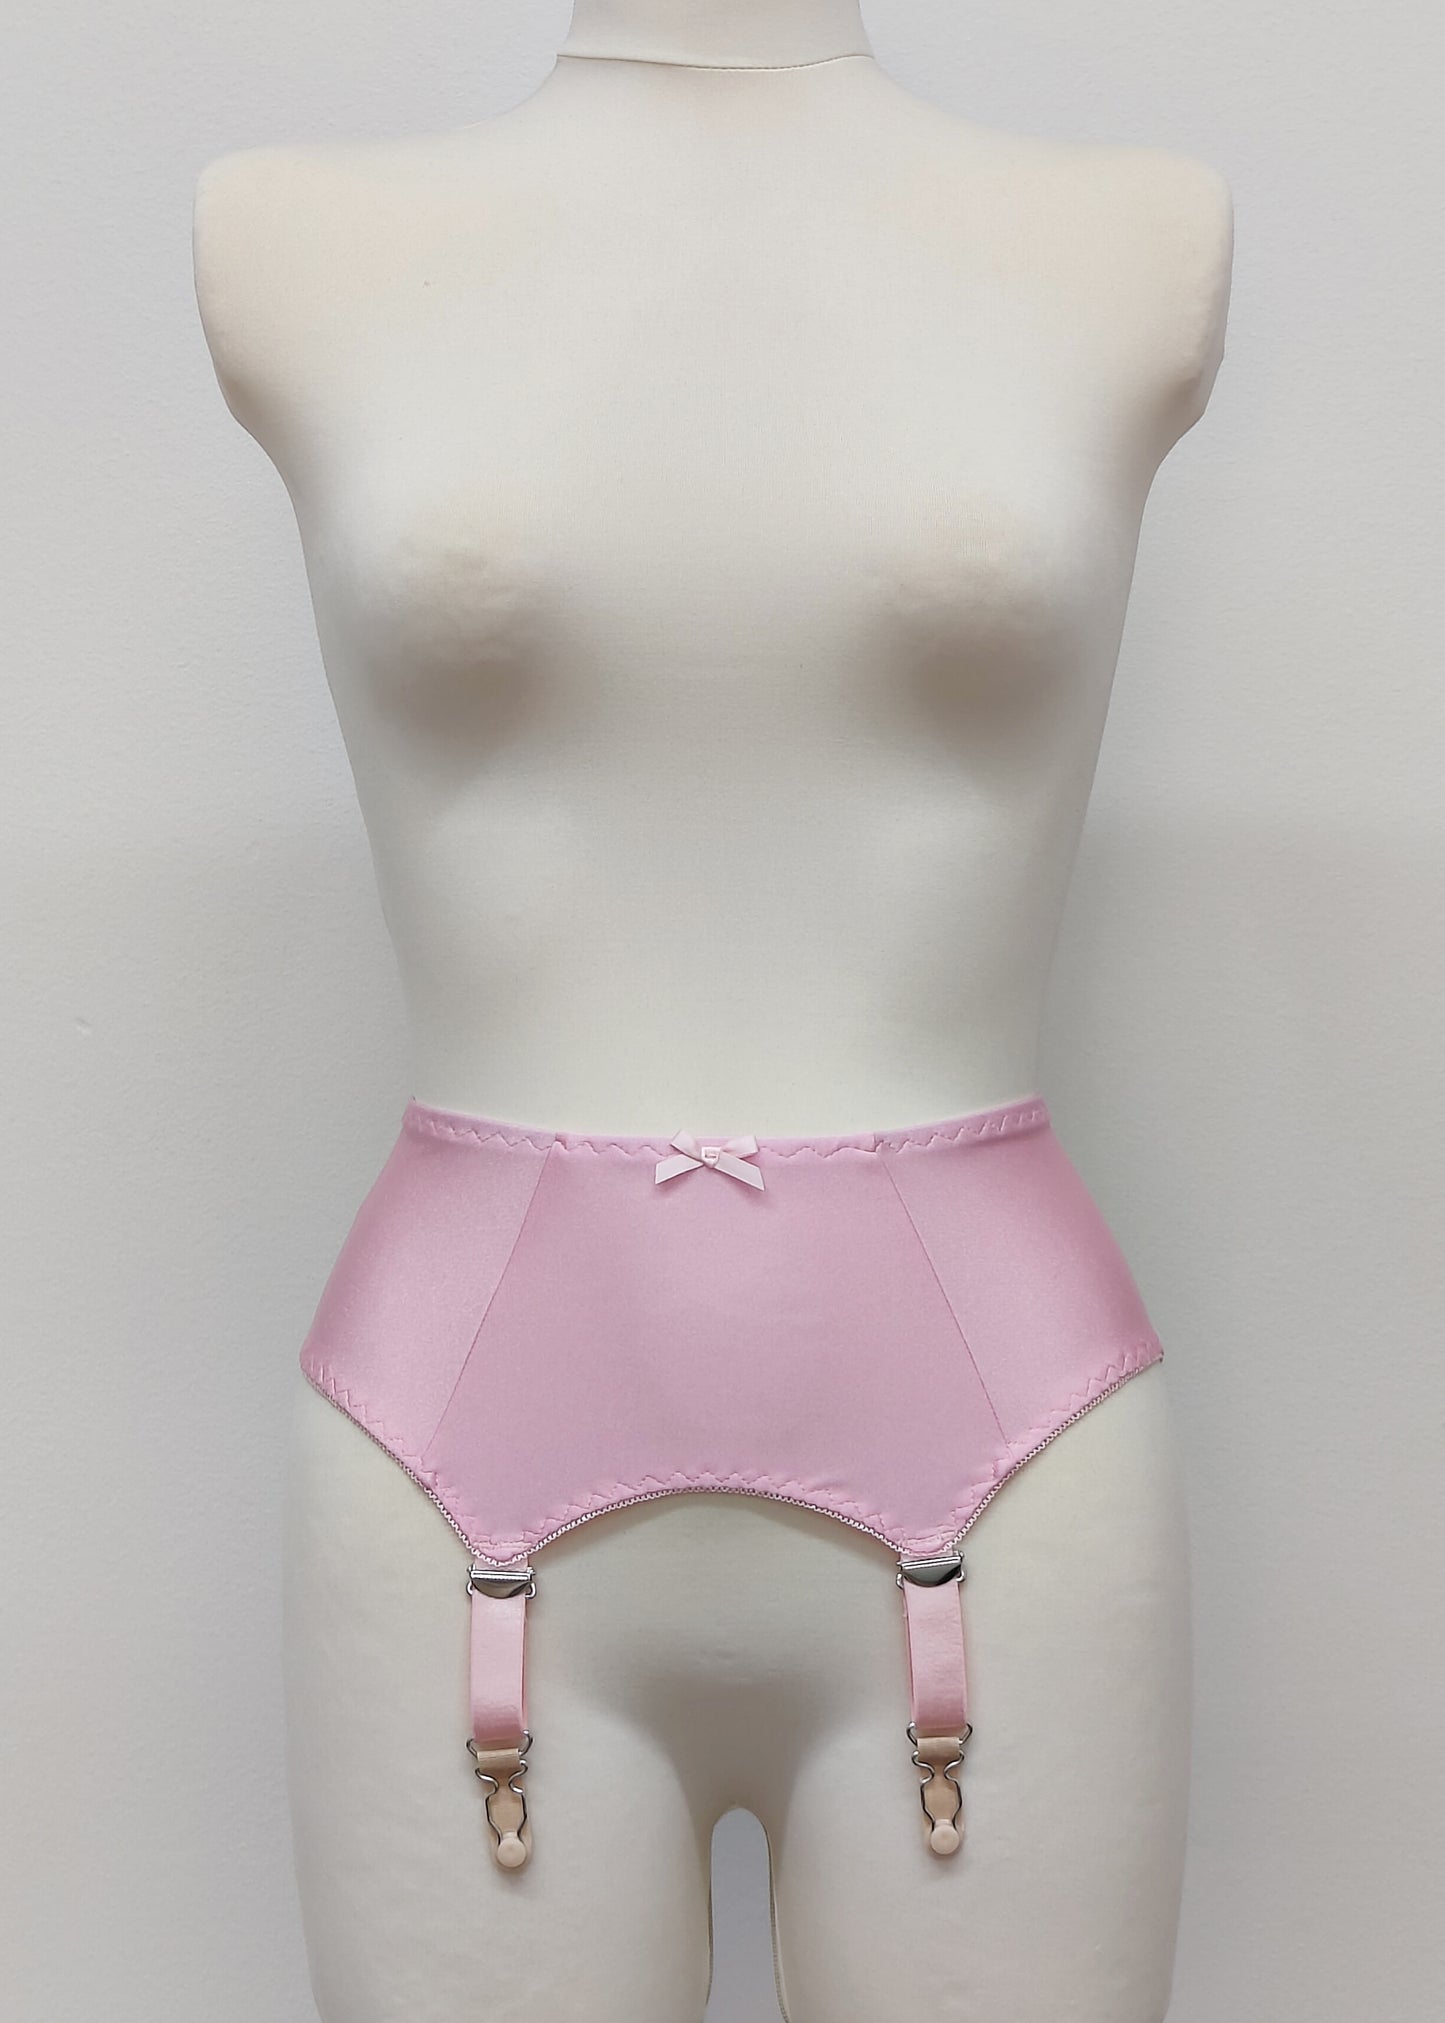 pink 4 strap Greta garter belt